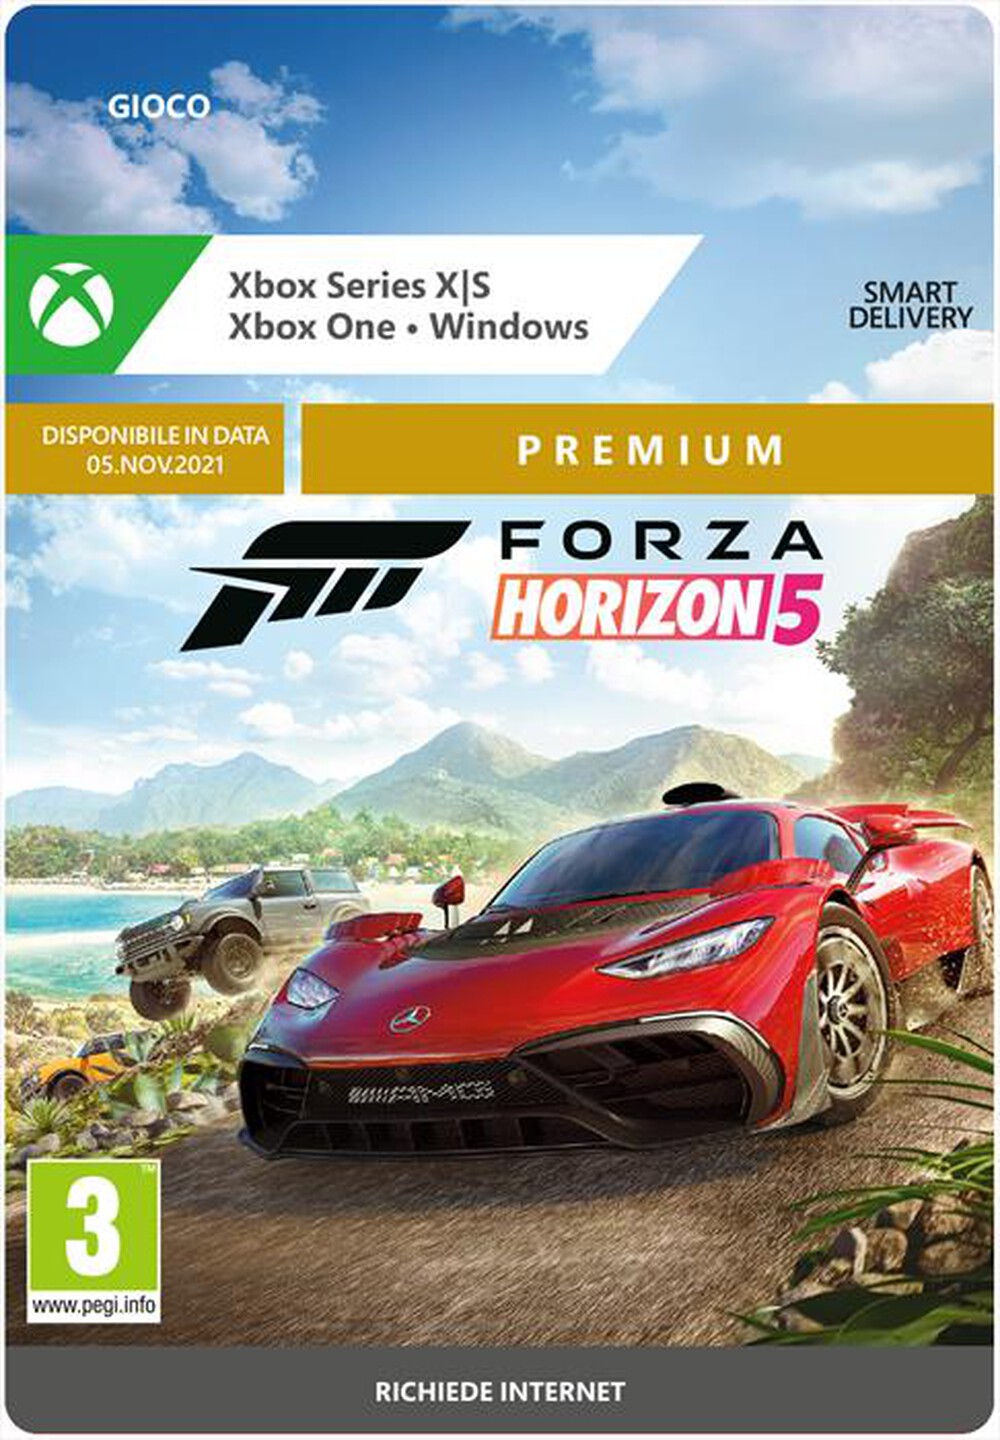 "MICROSOFT - Forza Horizon5 Premium Edition"